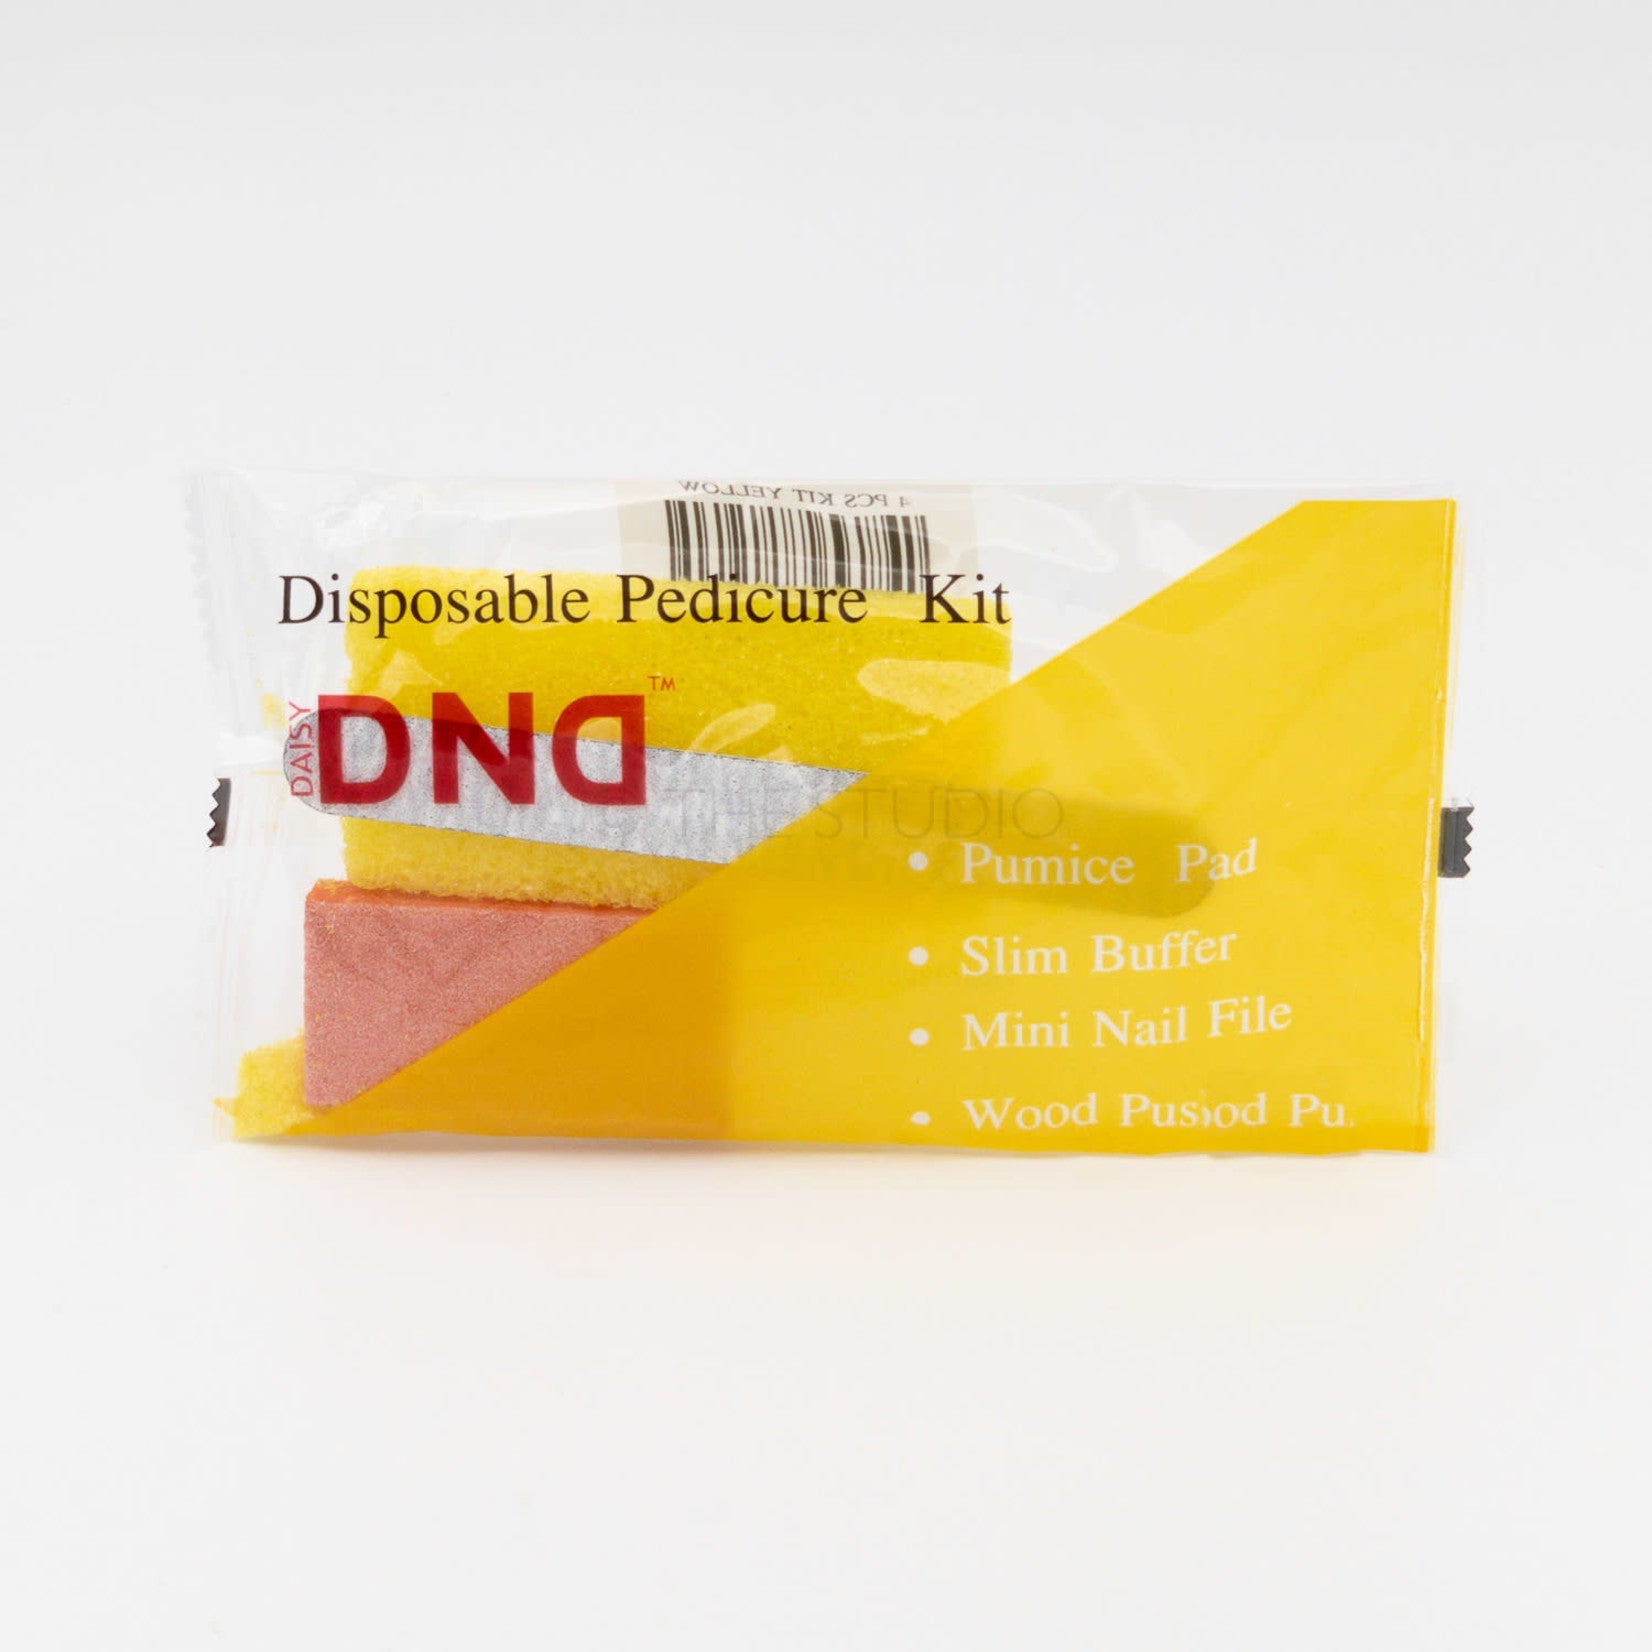 DND - Disposable Pedicure Kit - 10 ct